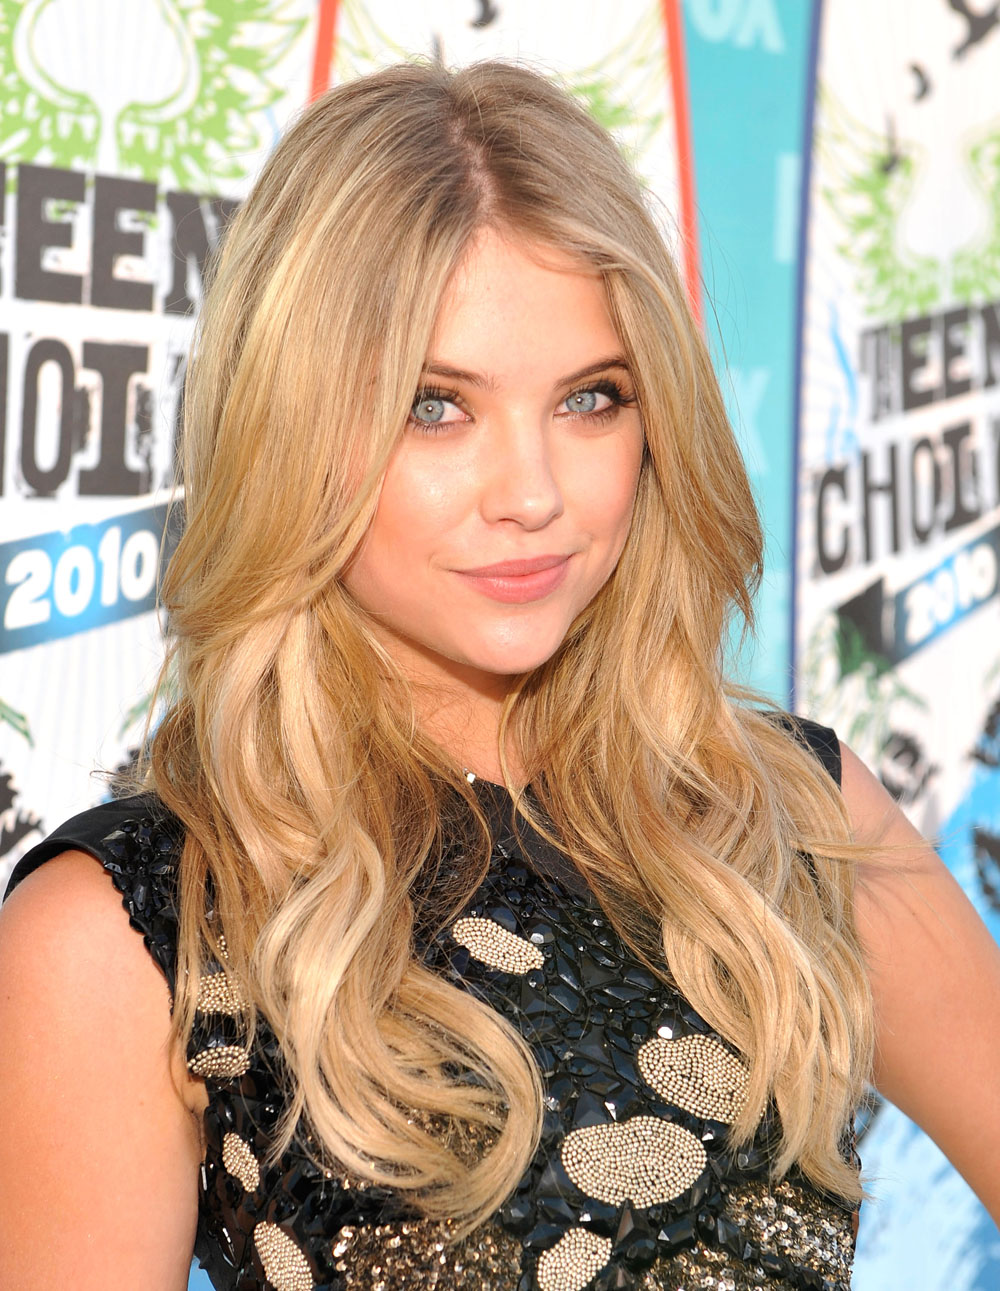 Ashley Benson in Teen Choice Awards 2010